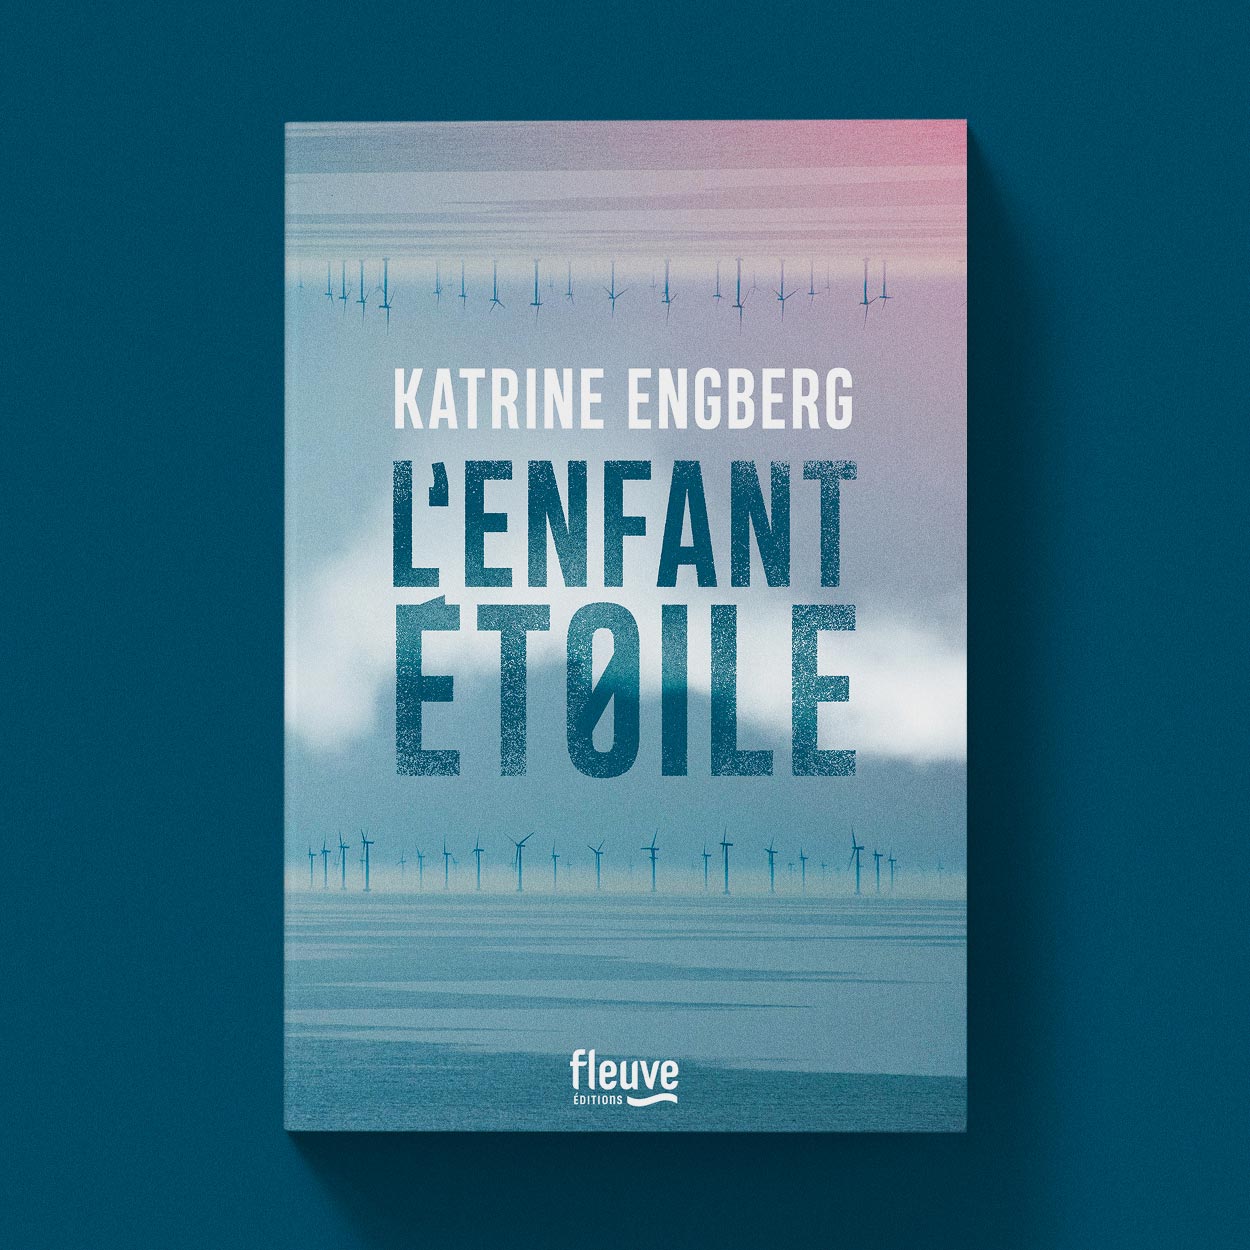 book_studio_enfant_etoile_11